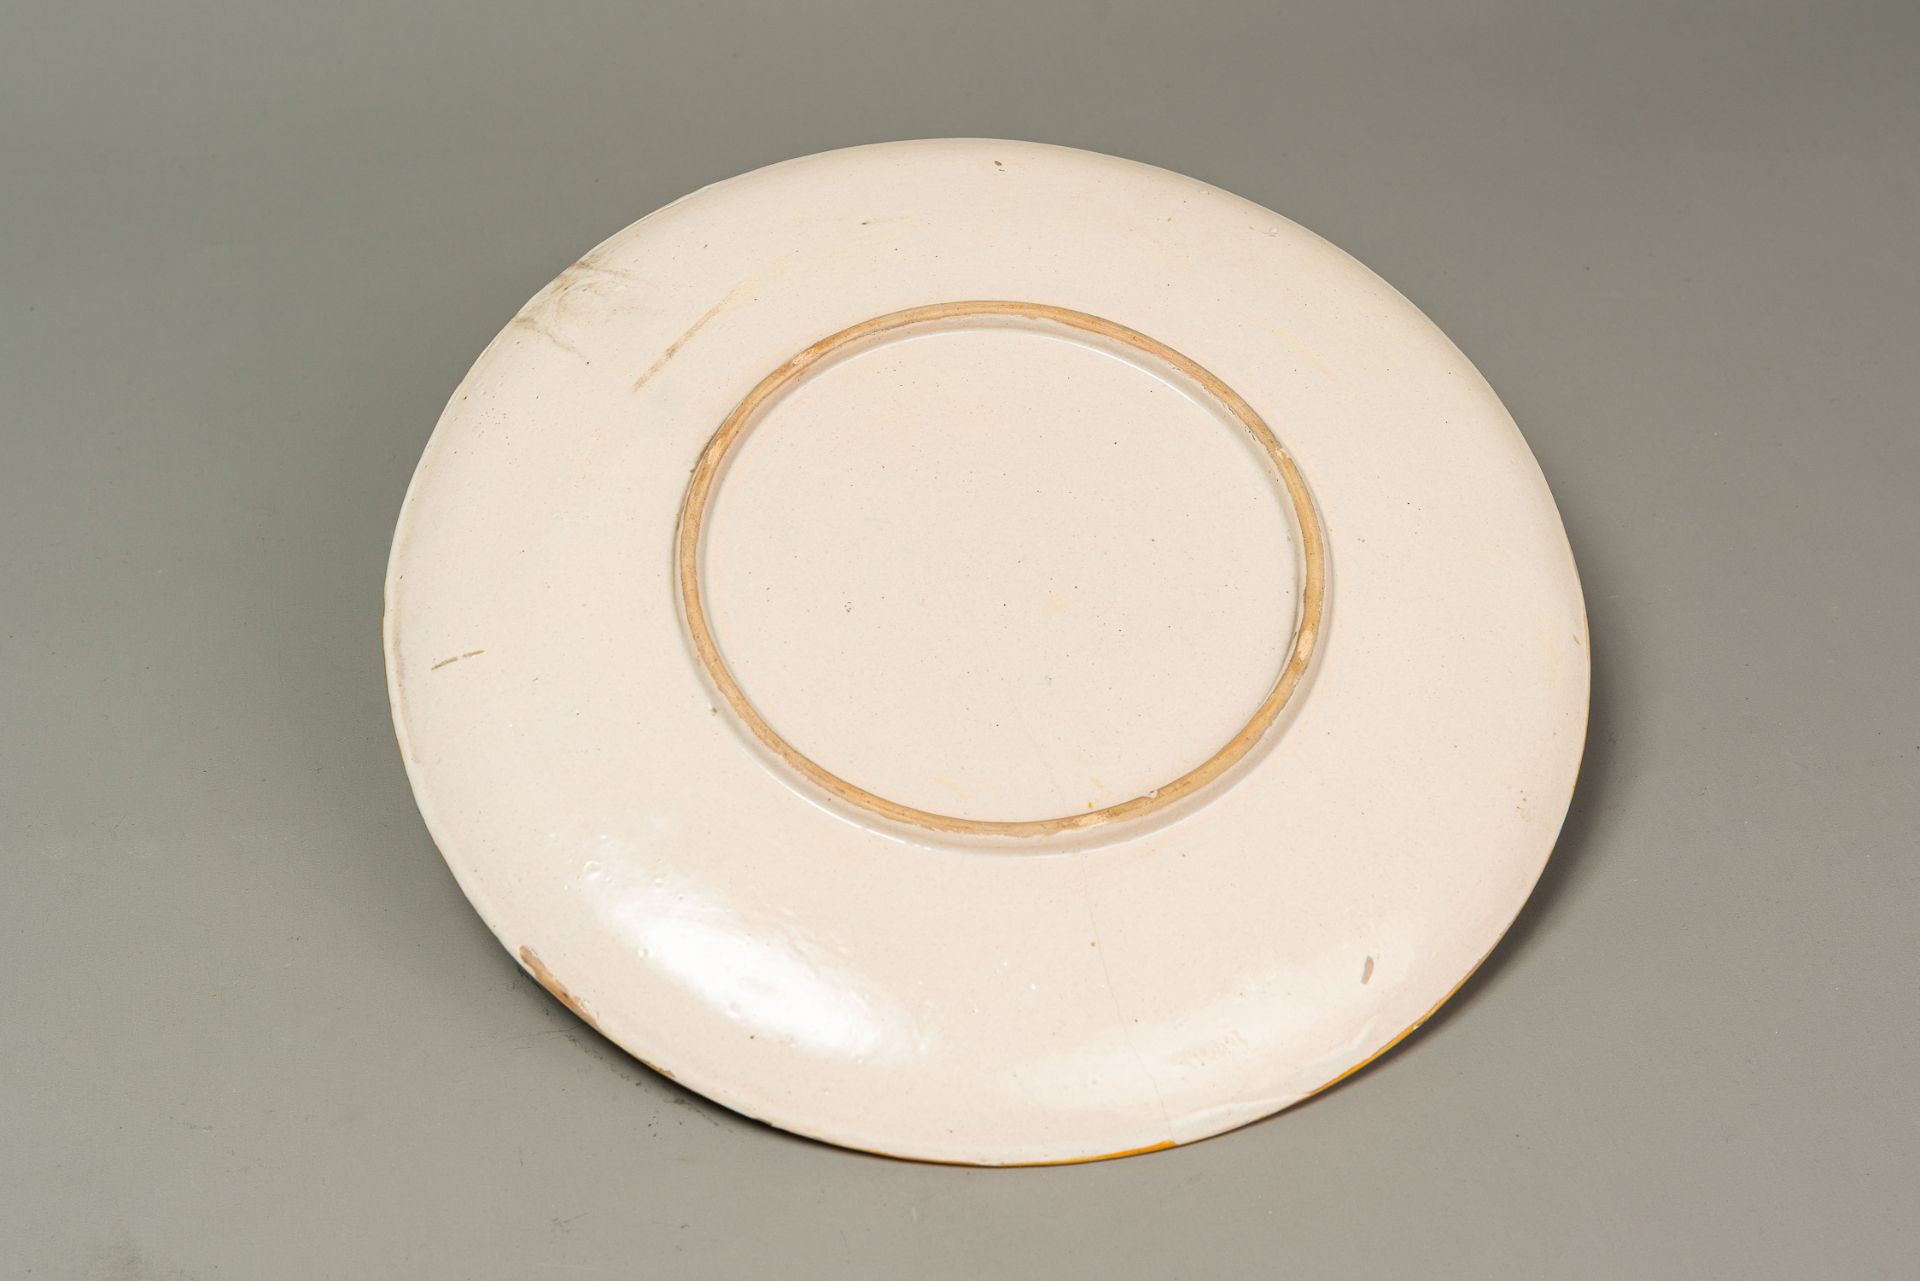 Urbino Ceramic Plate - Image 3 of 3